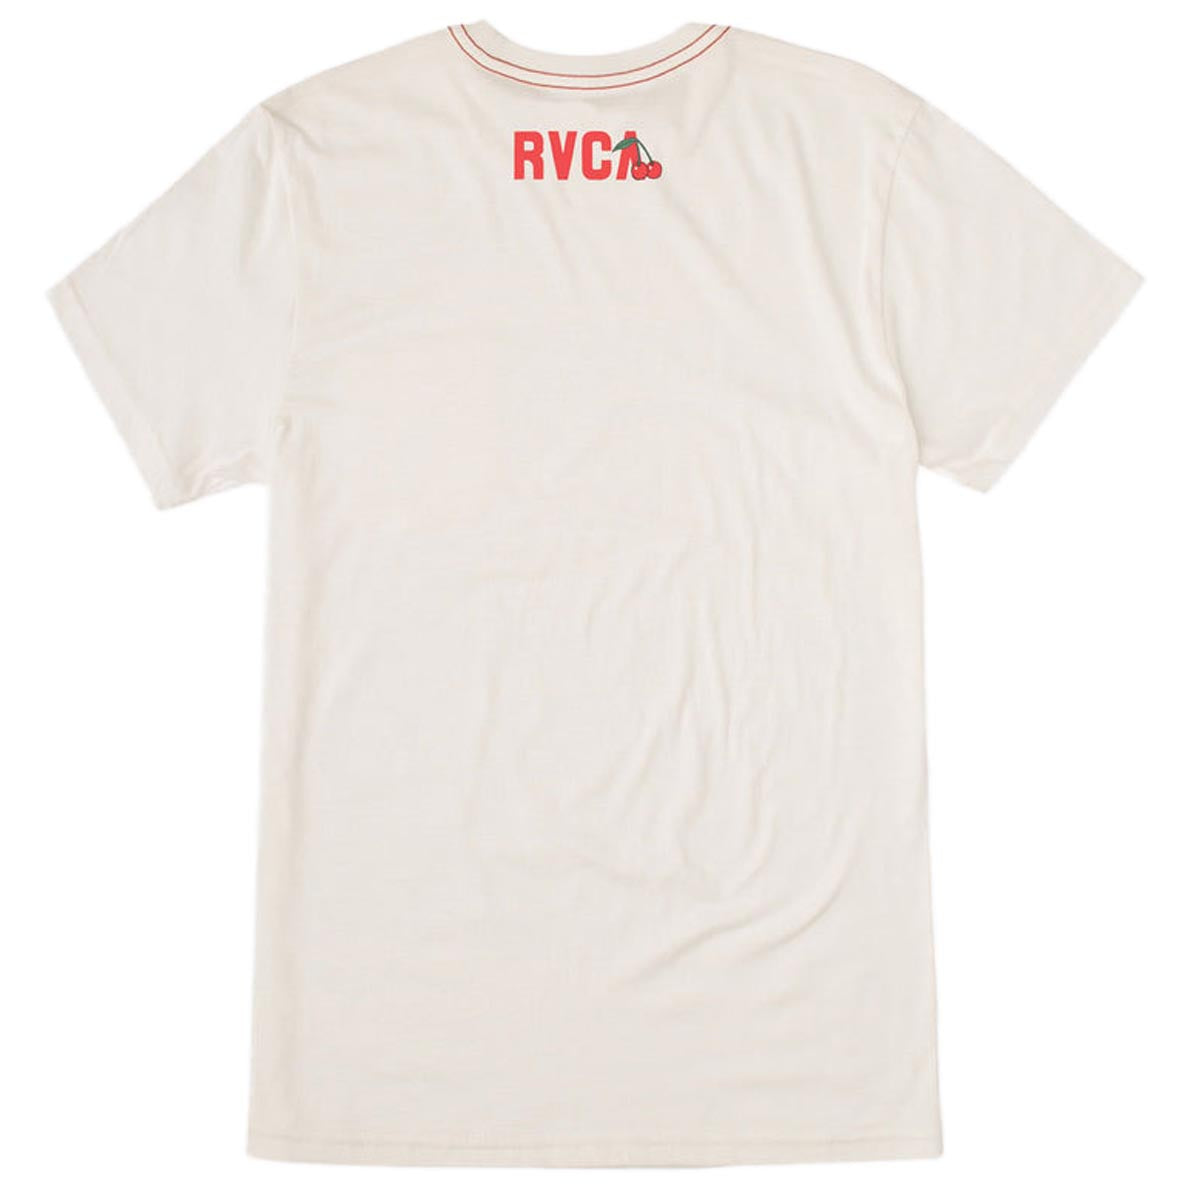 RVCA Luke Still Life T-Shirt - Antique White image 2